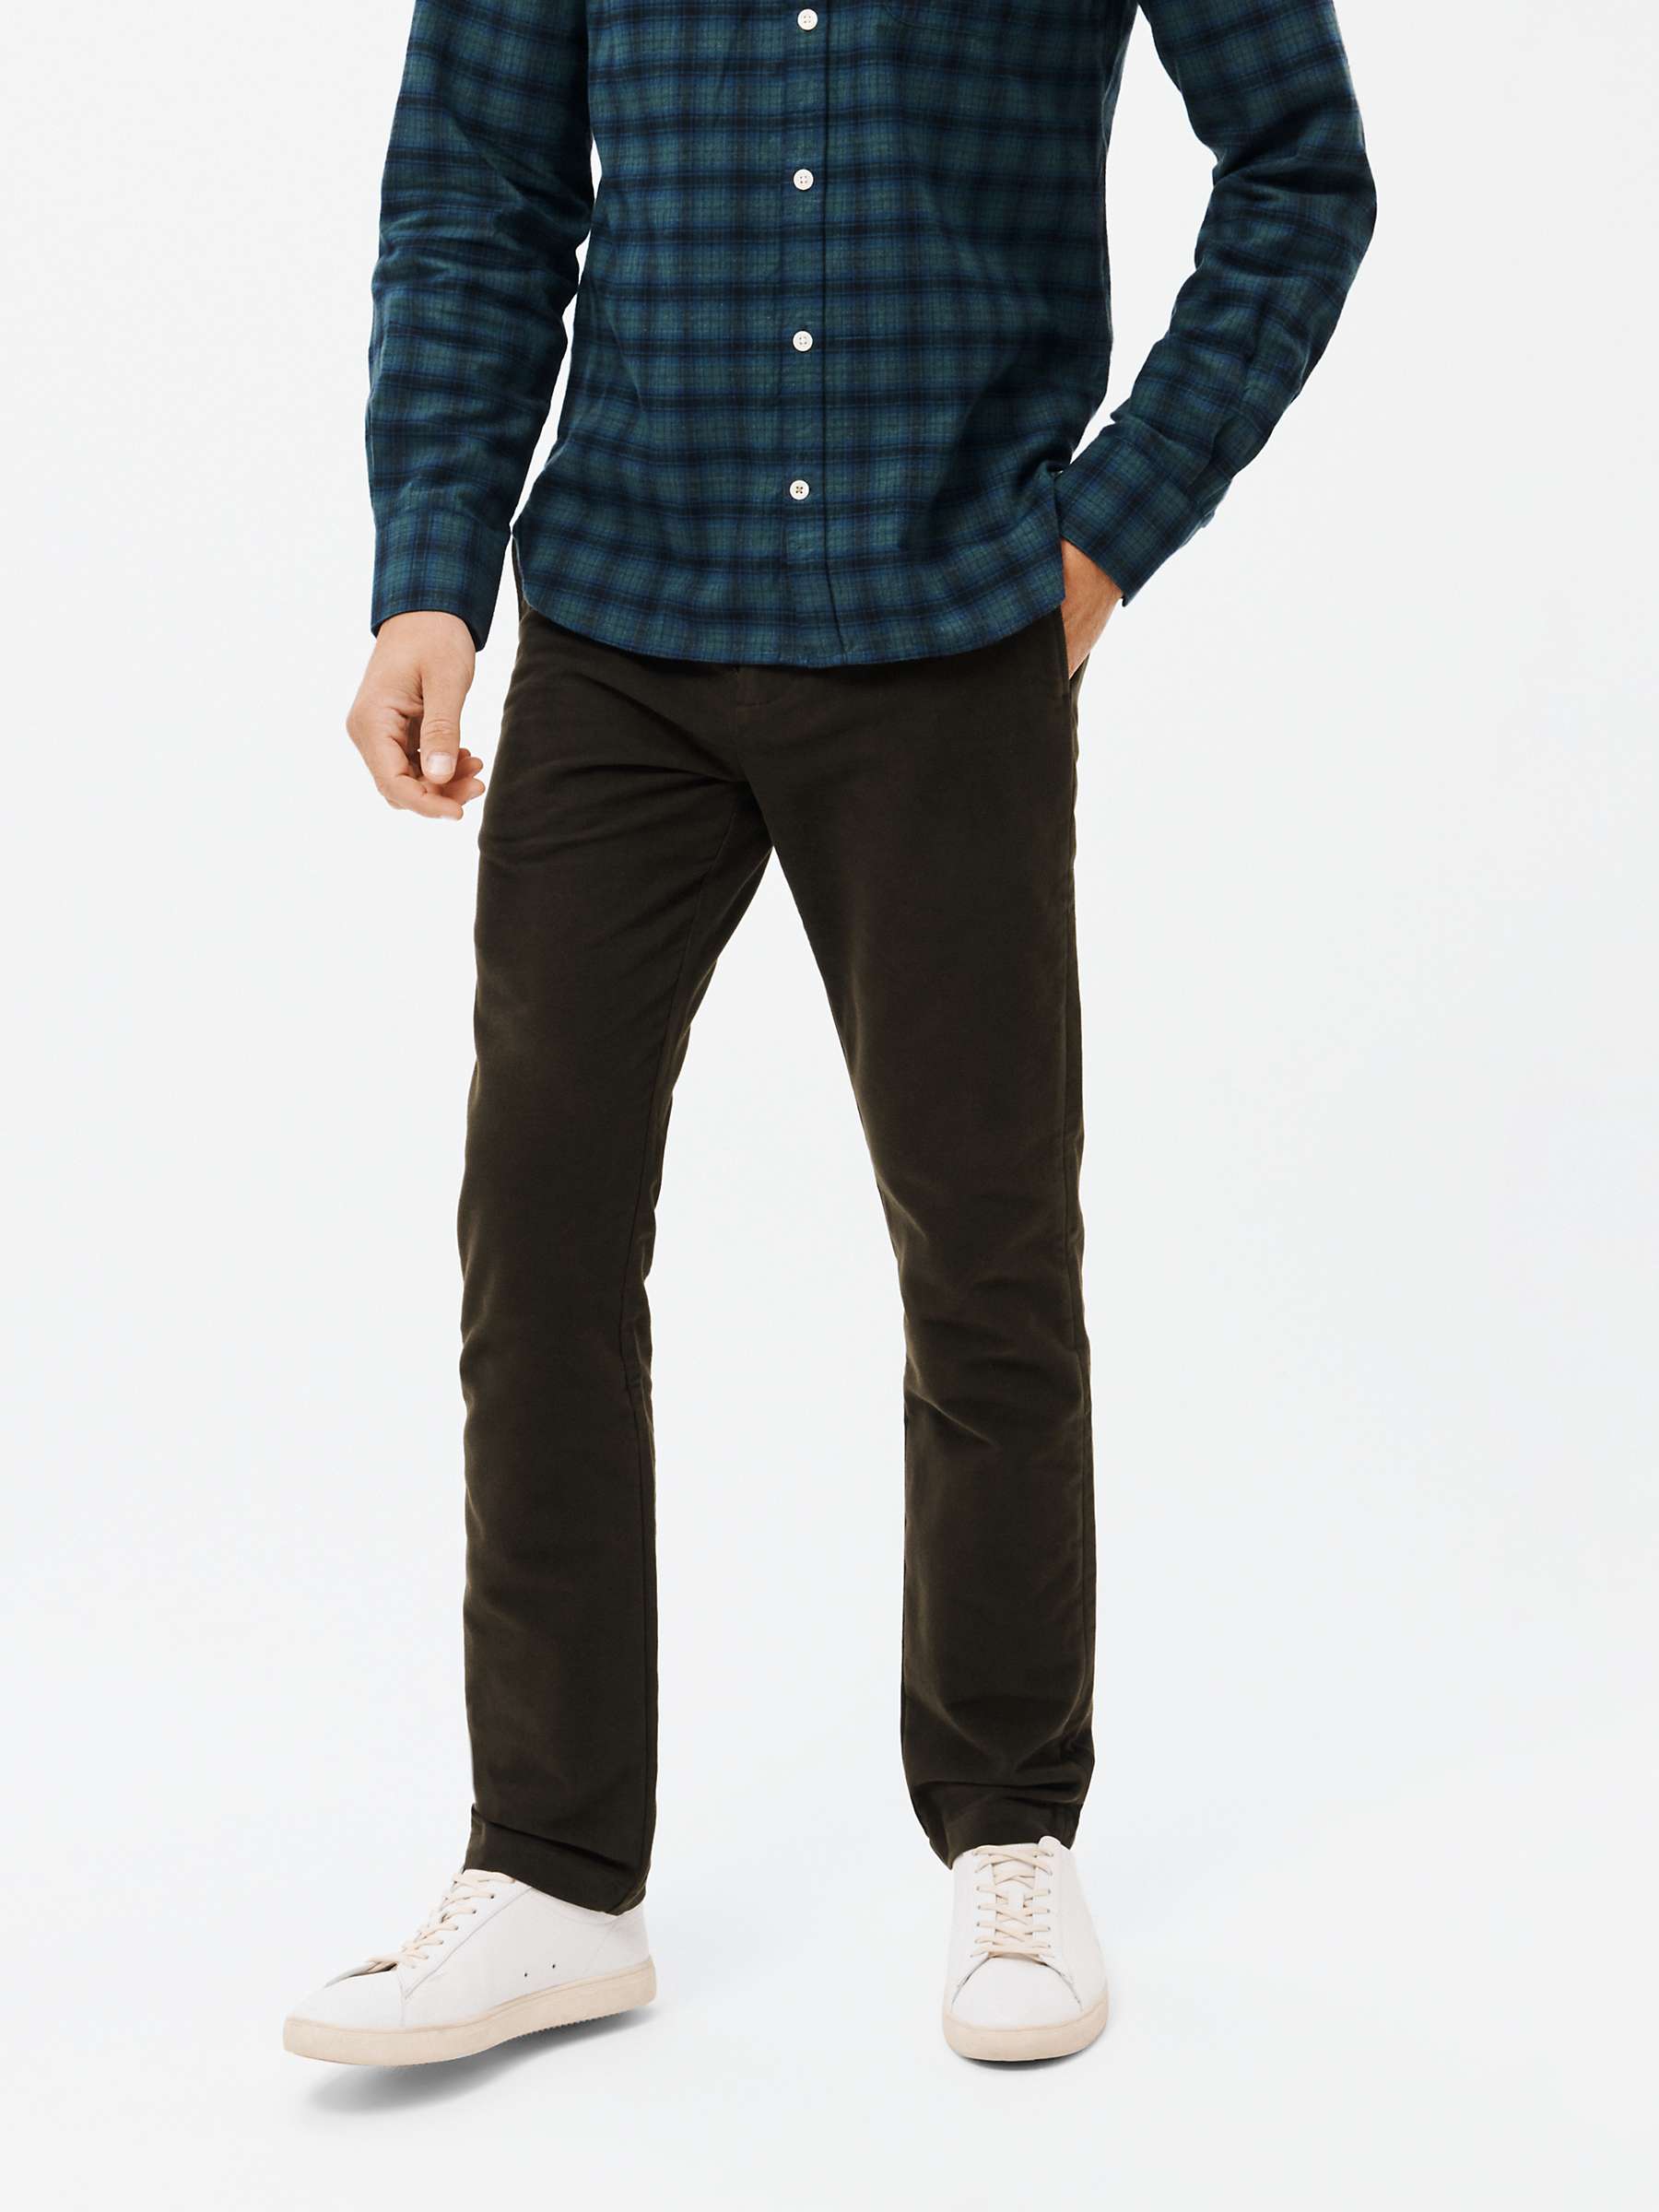 Buy Oliver Sweeney Ahakista Moleskin Cotton Suit Trousers Online at johnlewis.com